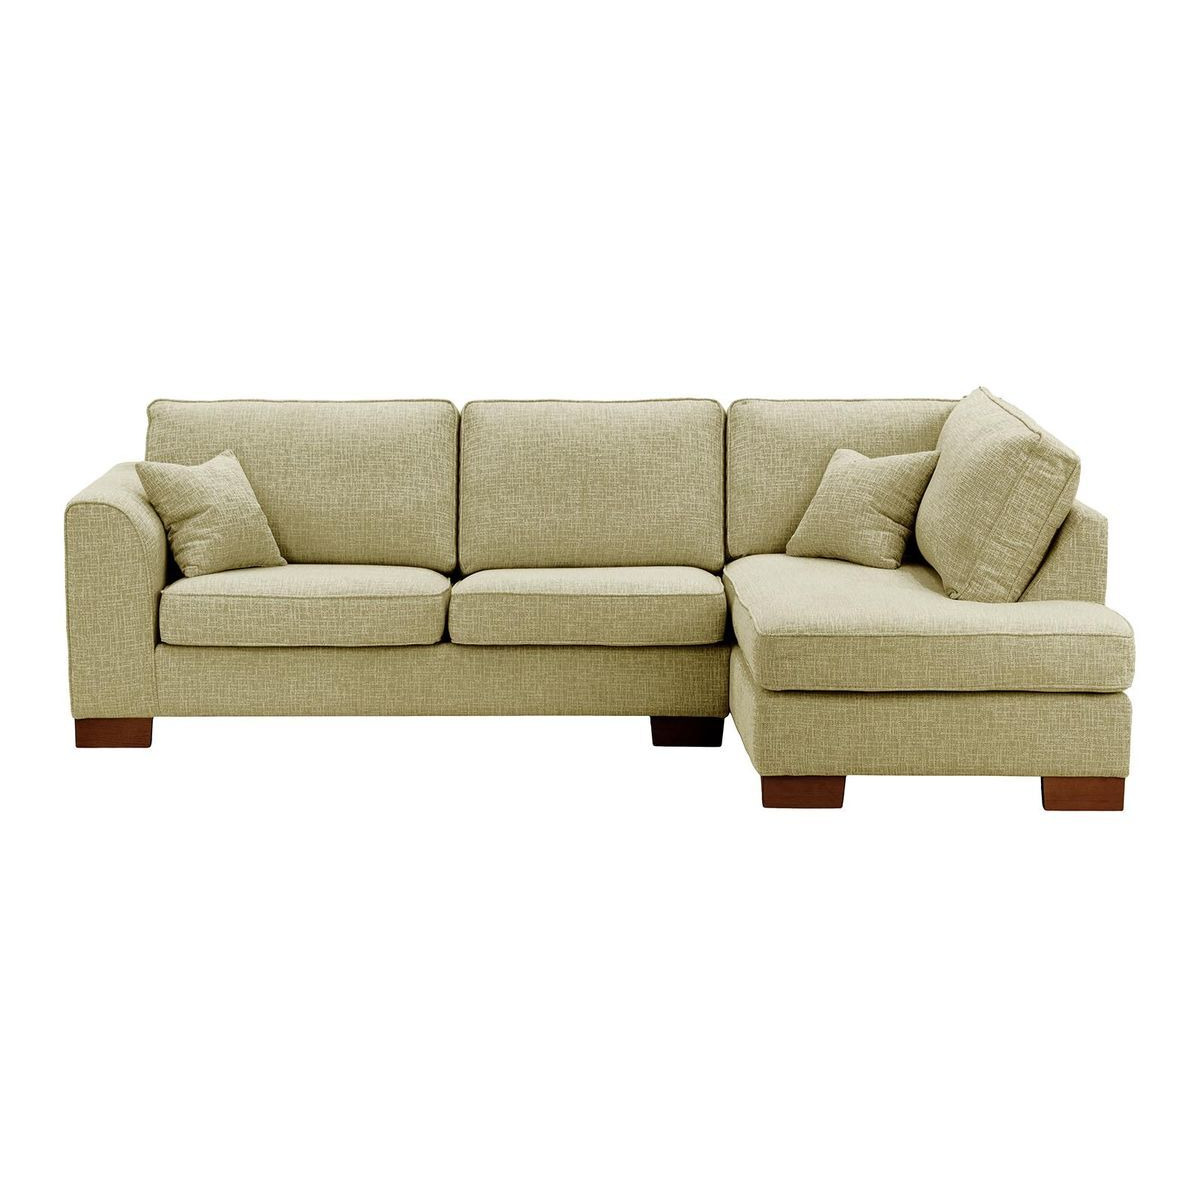 Avos Right Hand Corner Sofa Bed, mustard, Leg colour: dark oak - image 1